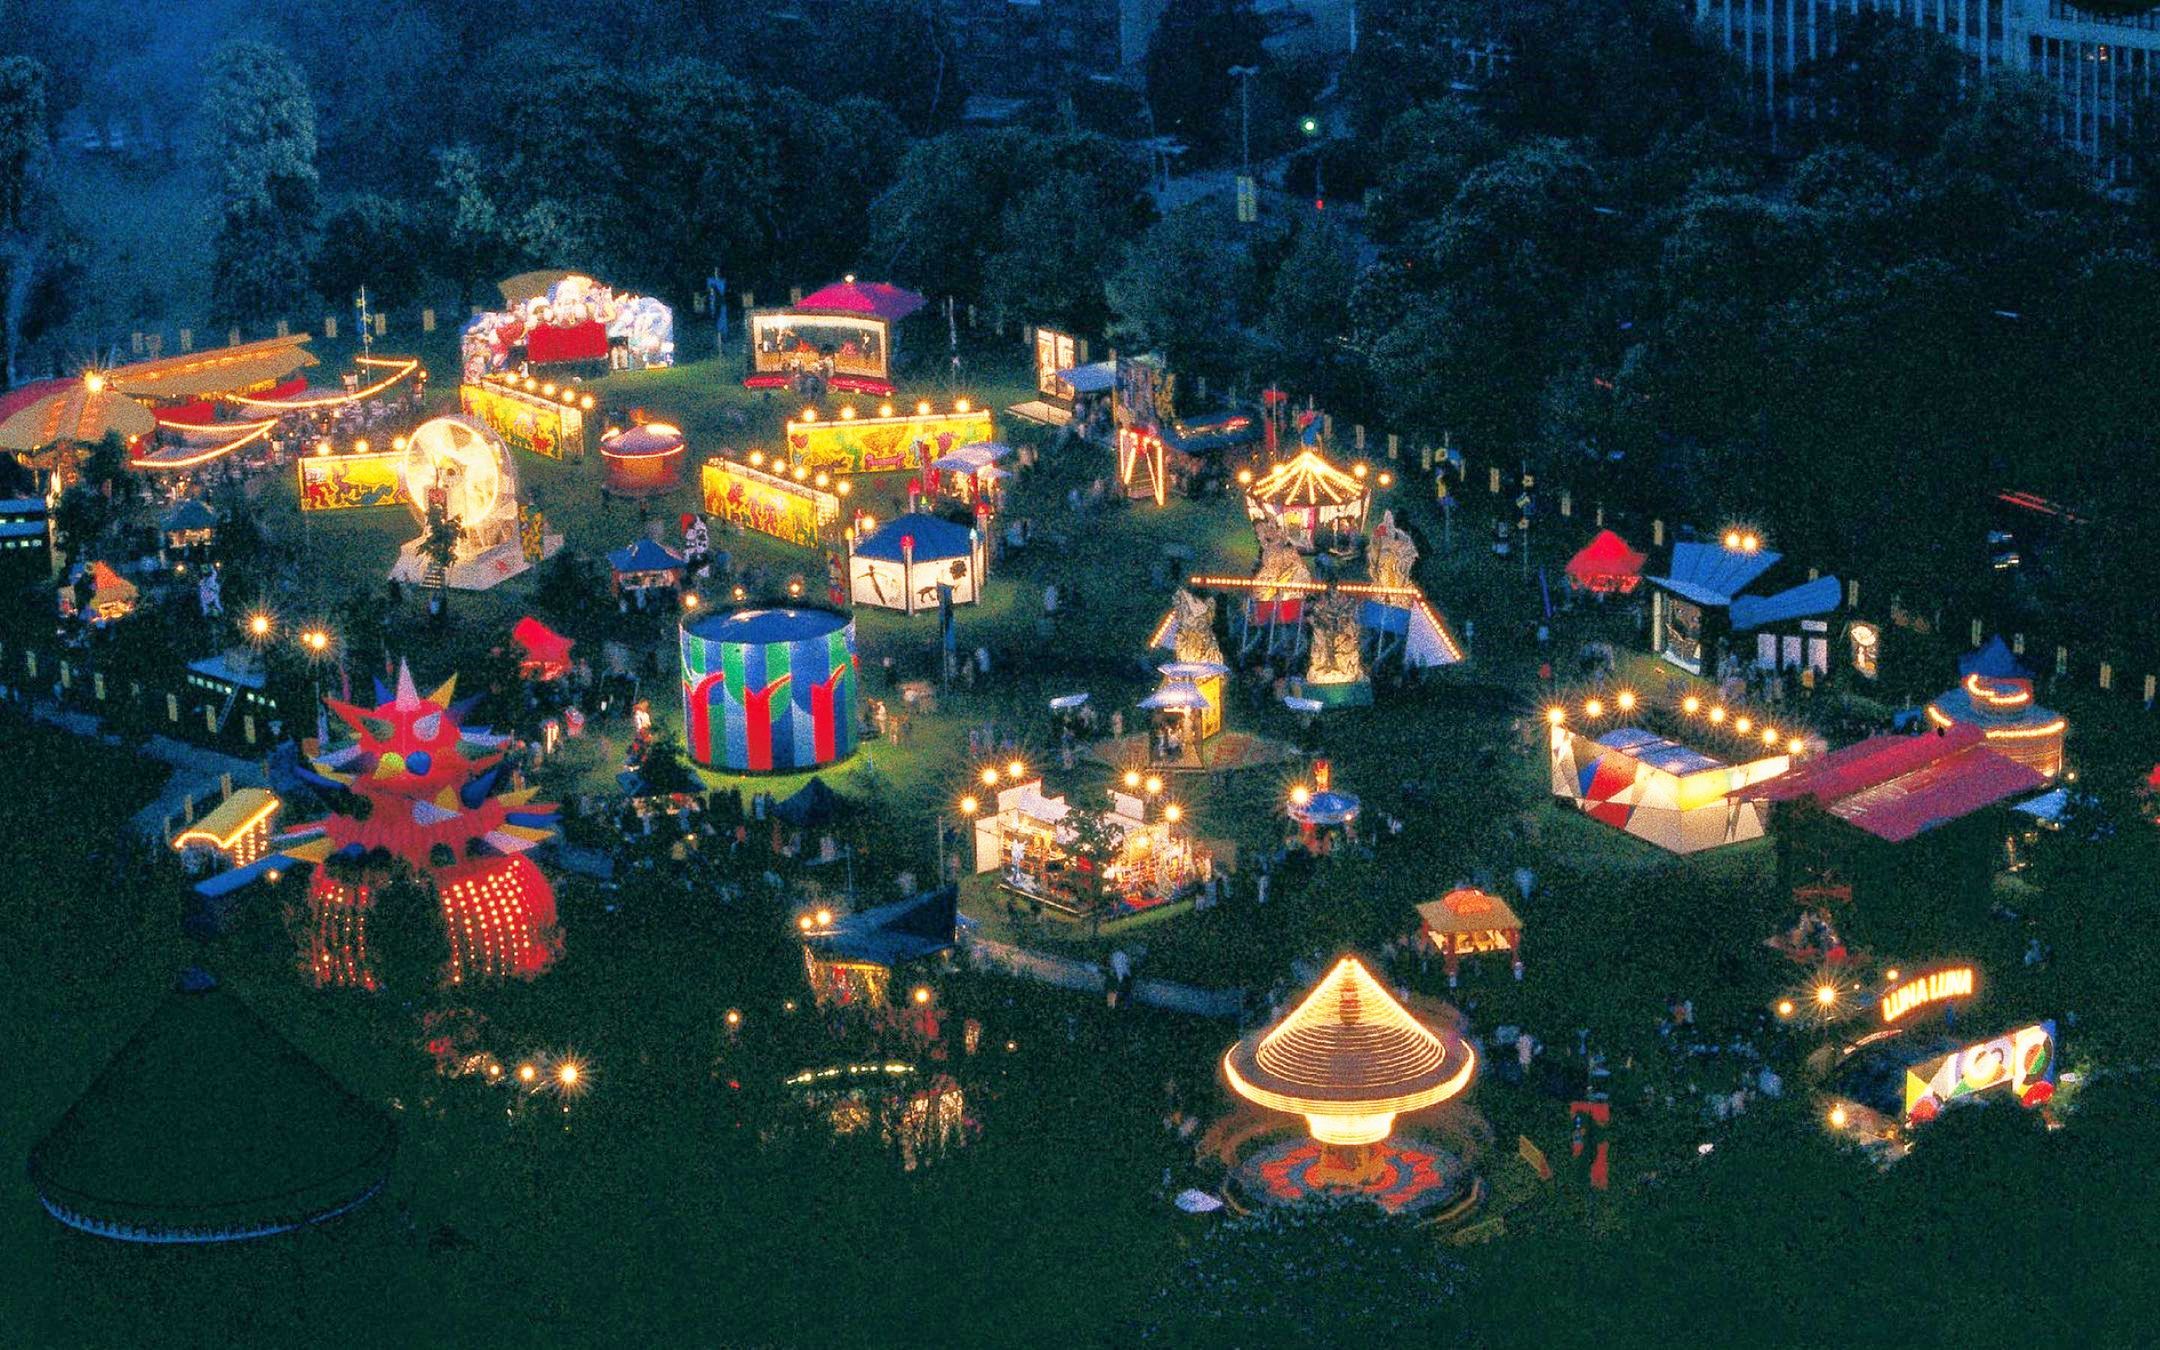 Luna Luna was the first art amusement park in Hamburg, Germany